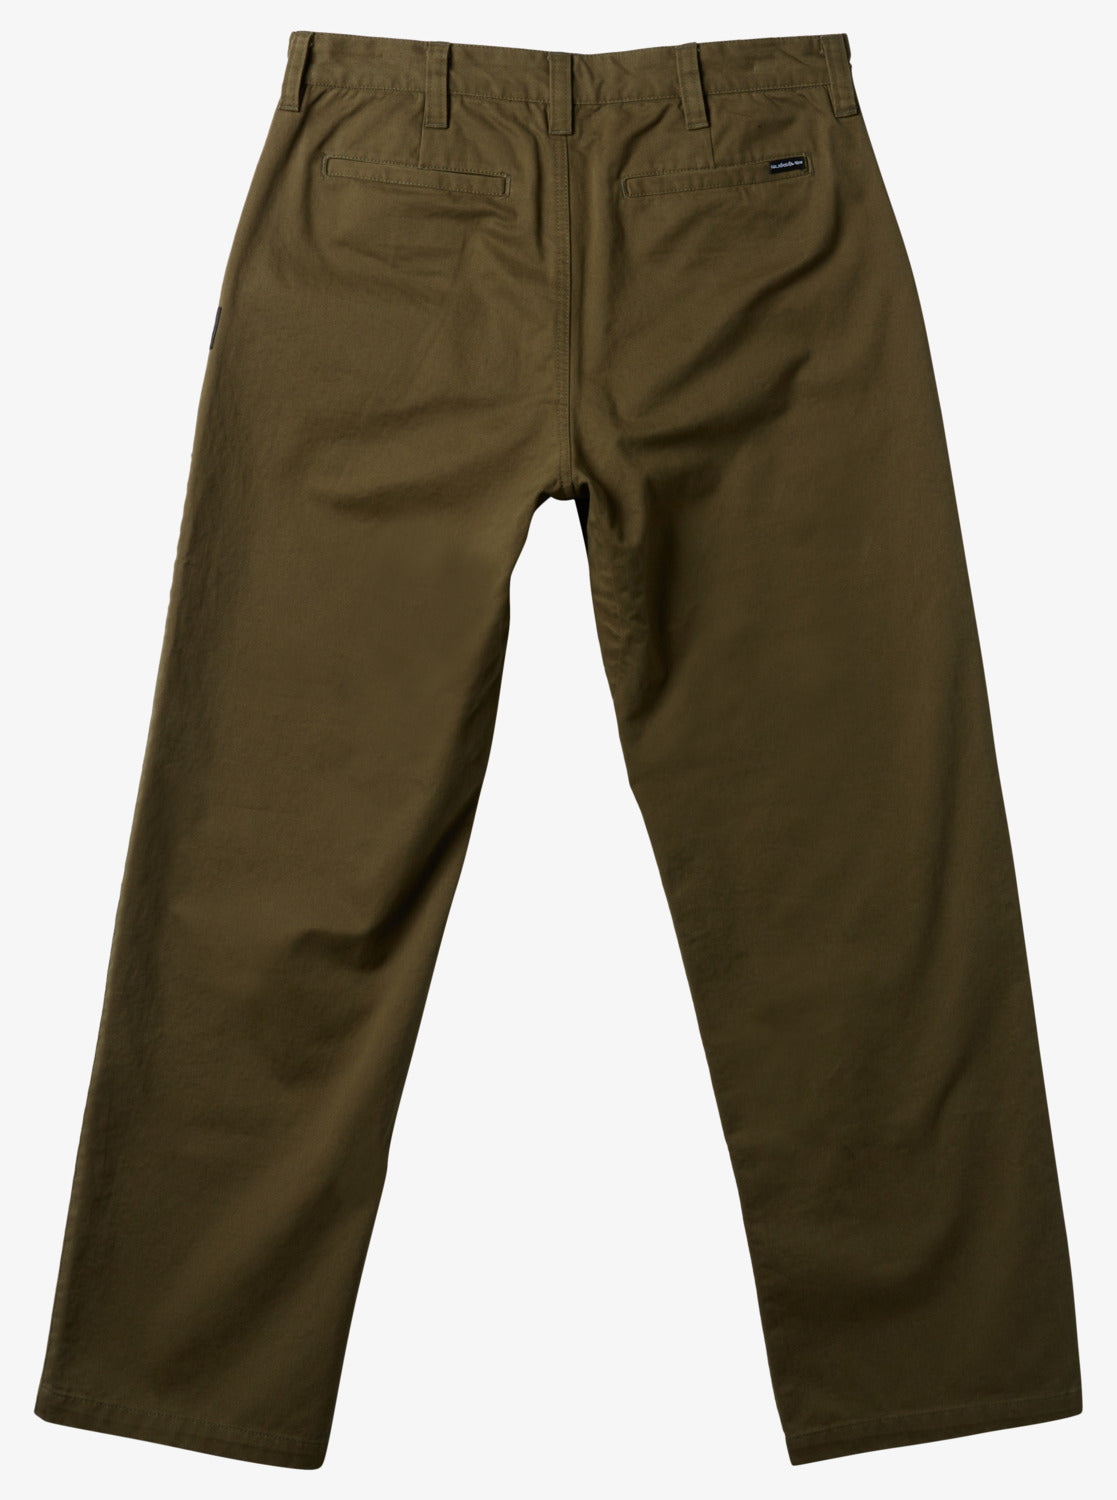 Buy Men Brown Slim Fit Solid Casual Trousers Online - 252181 | Allen Solly